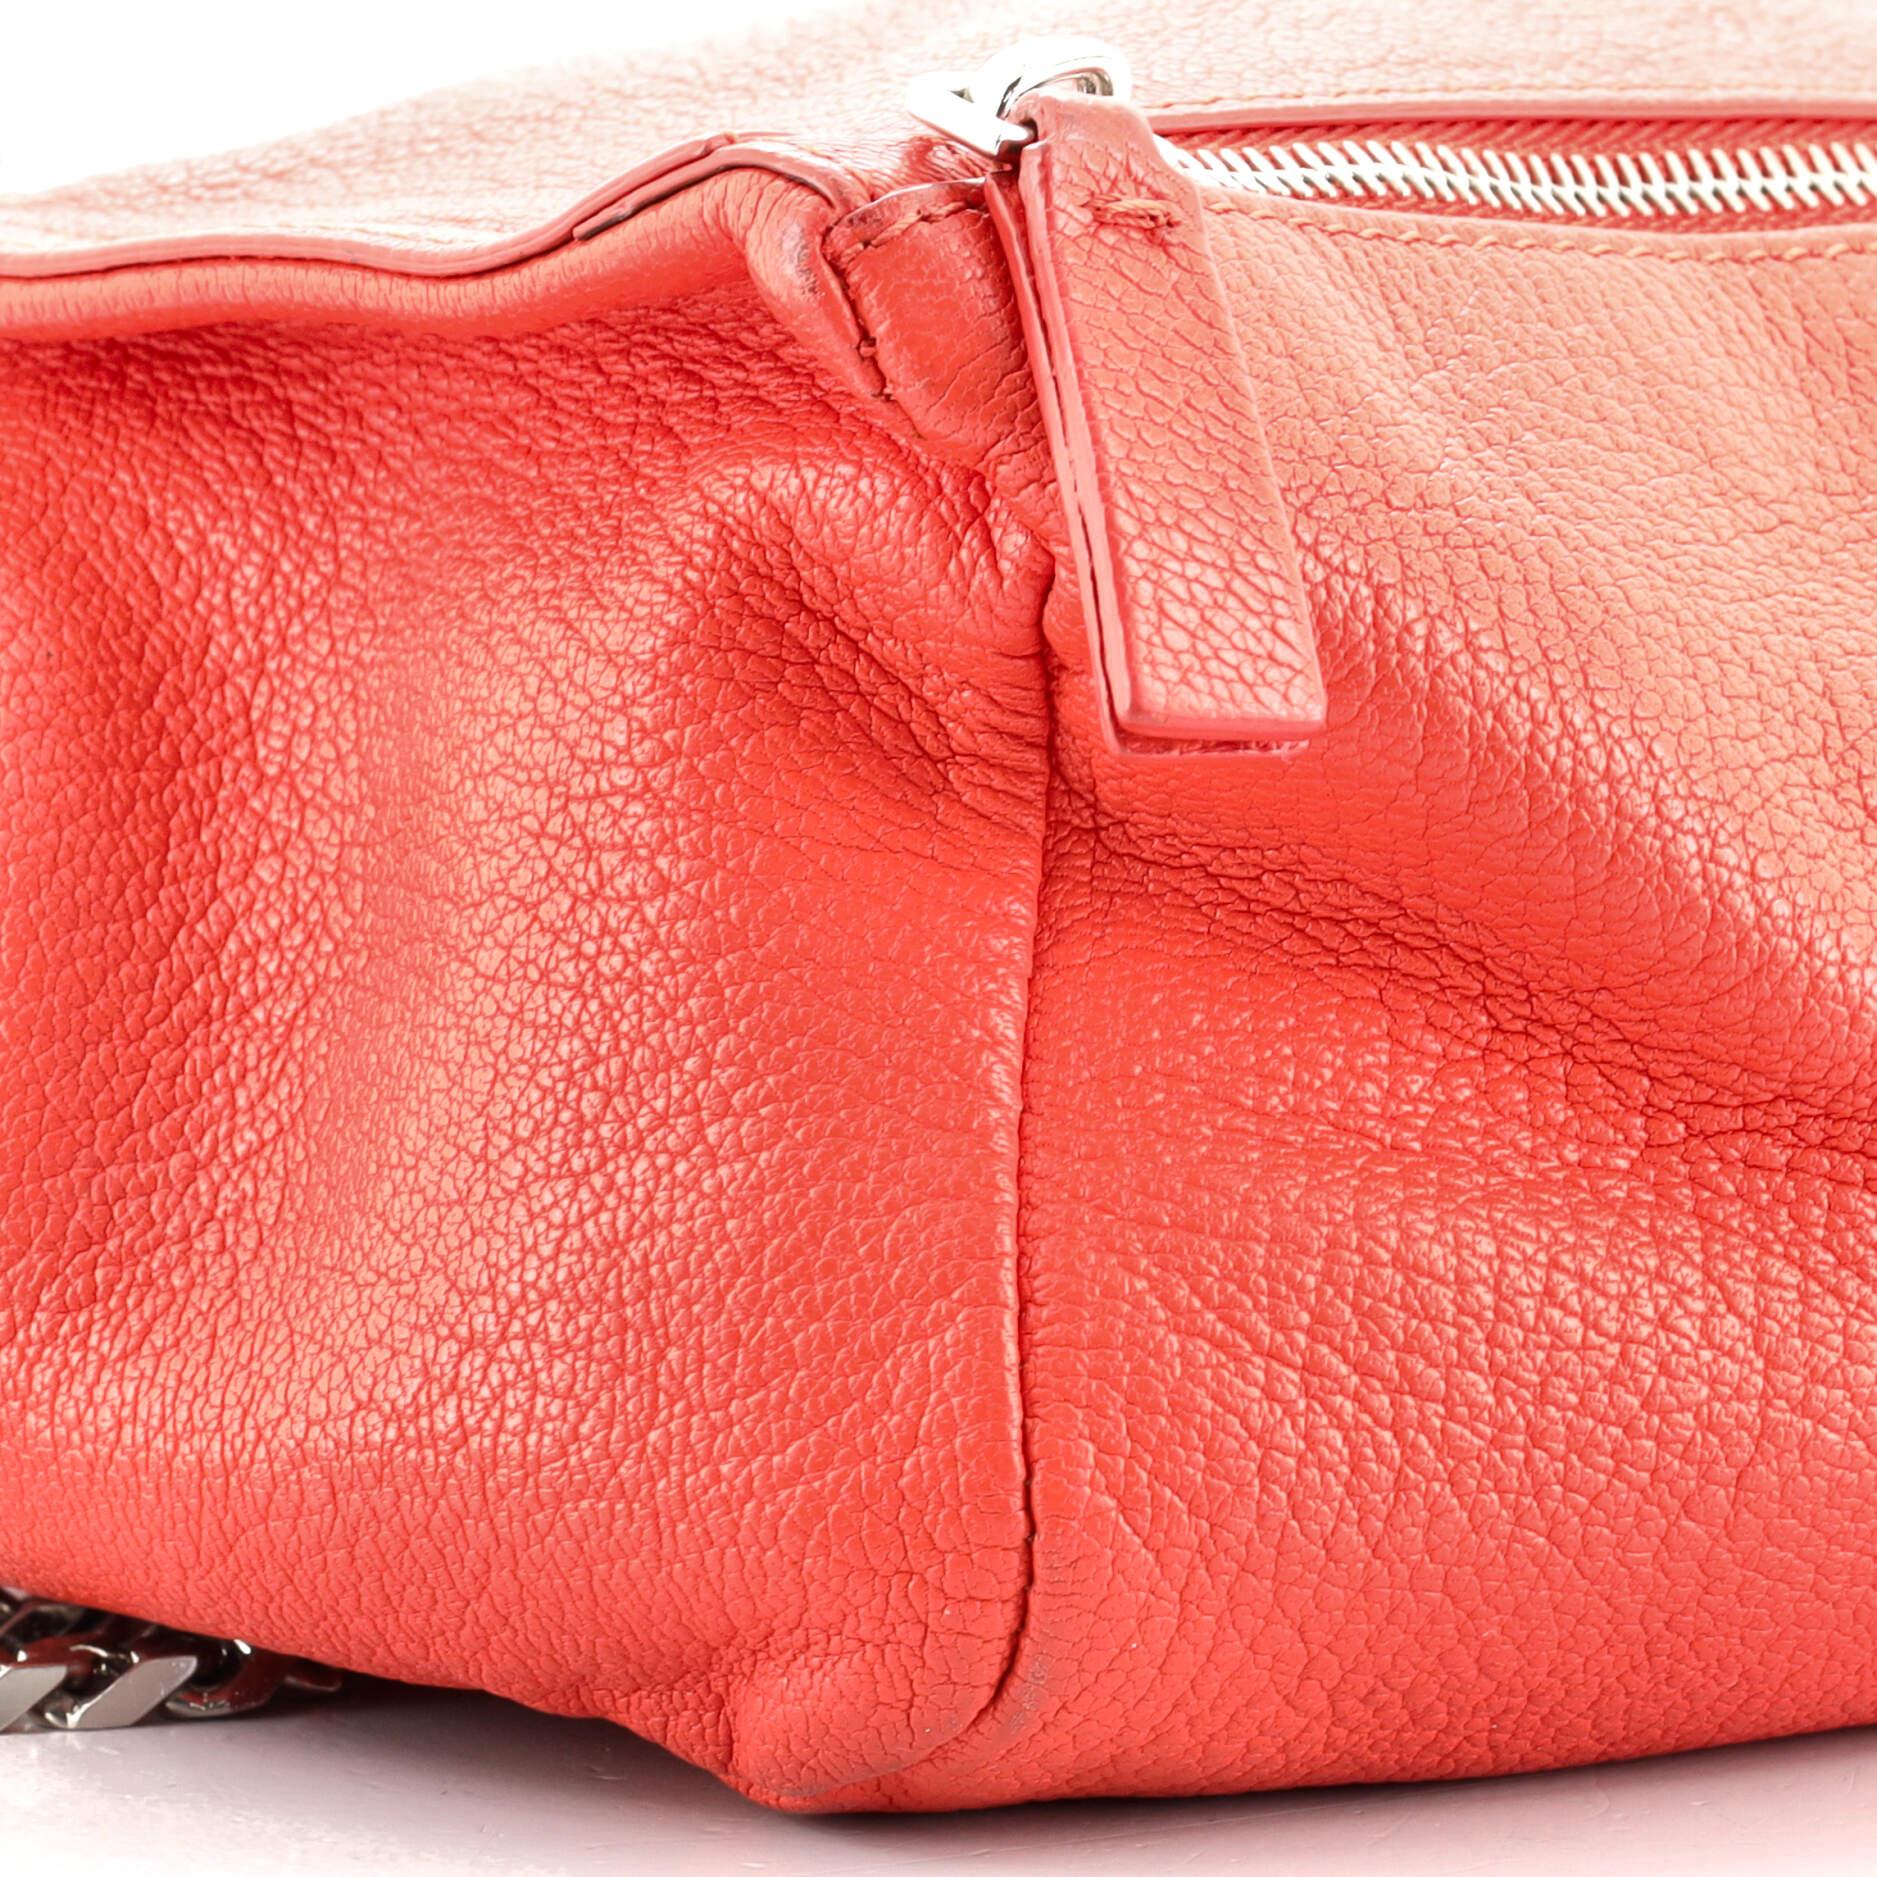 Givenchy Pandora Chain Bag Leather Mini 3